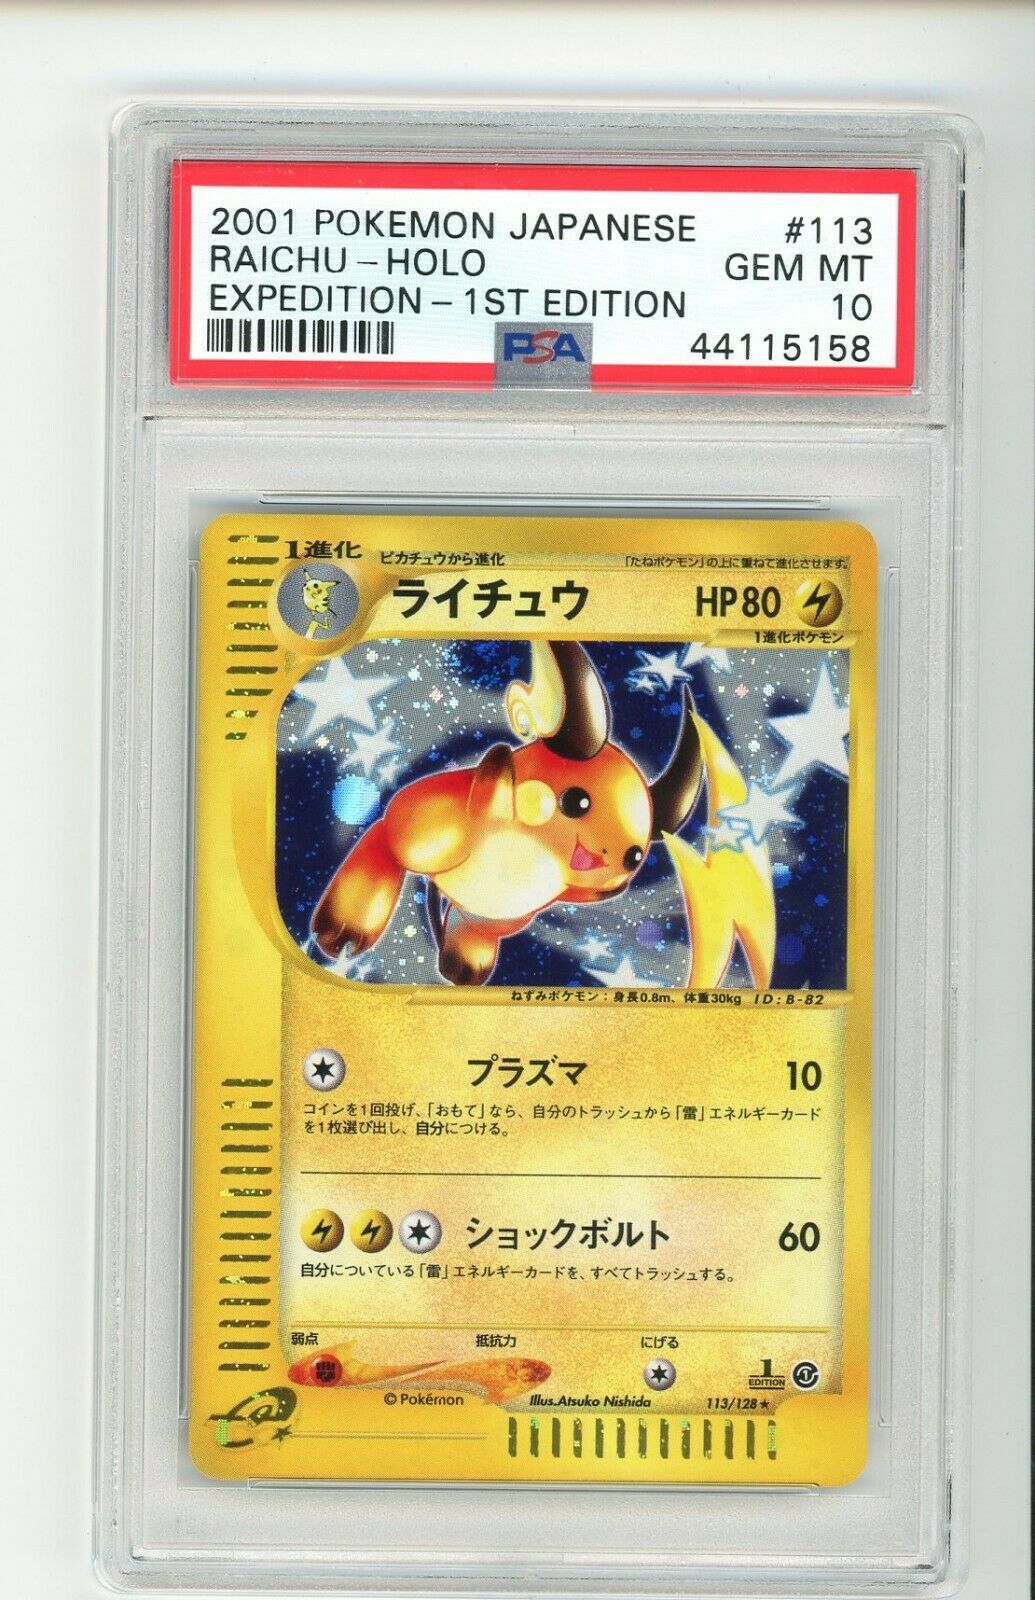 PSA 10 POKEMON JAPANESE RAICHU 113128 CARD 2001 1ST ED ESERIES EXPEDITION